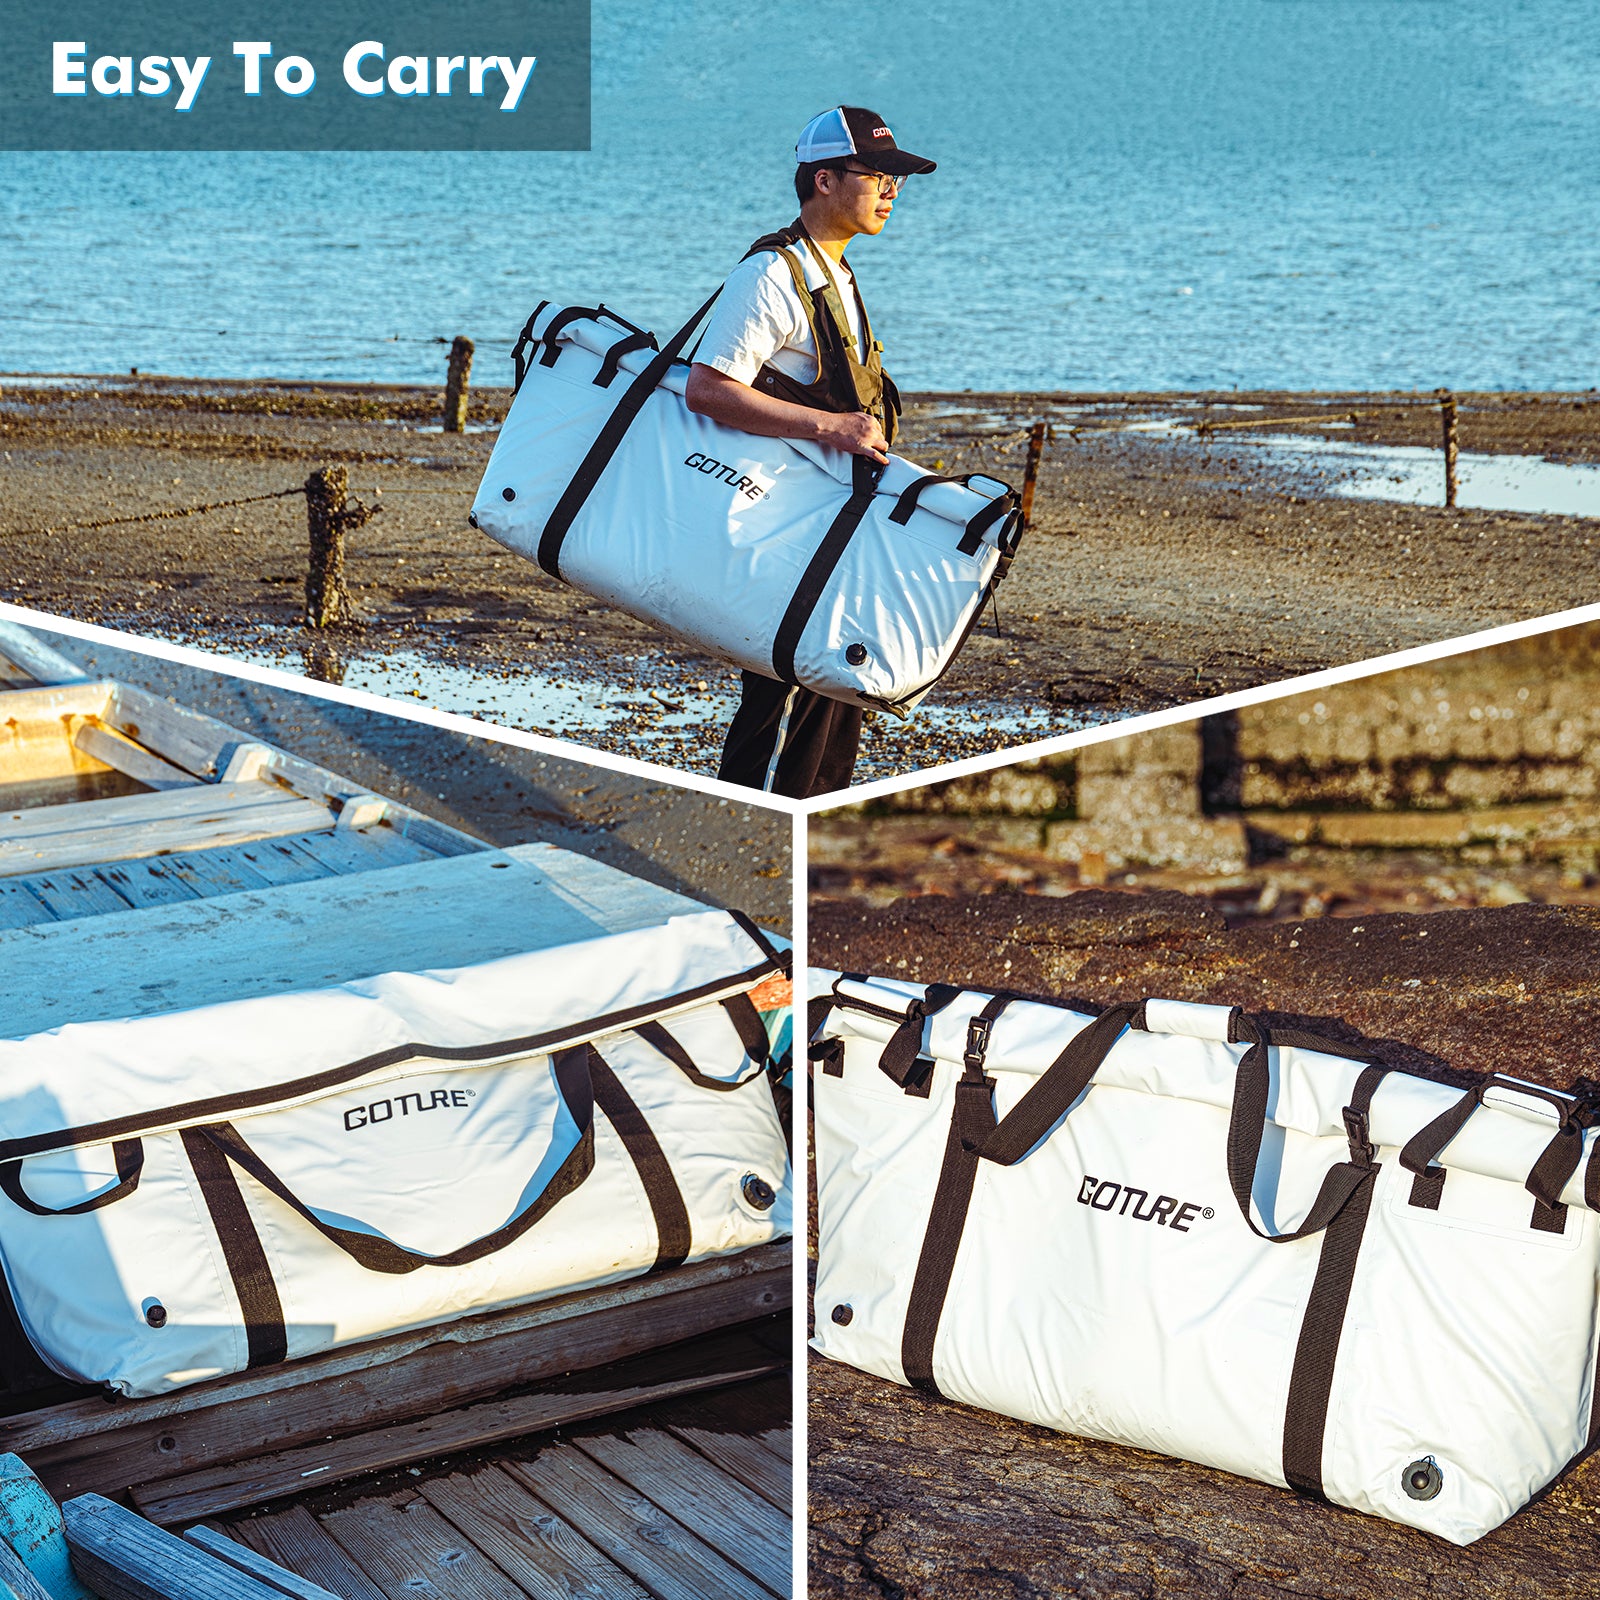 Goture Insulated Fish Cooler Bag, Monster Leakproof Fish Kill Bag – GOTURE